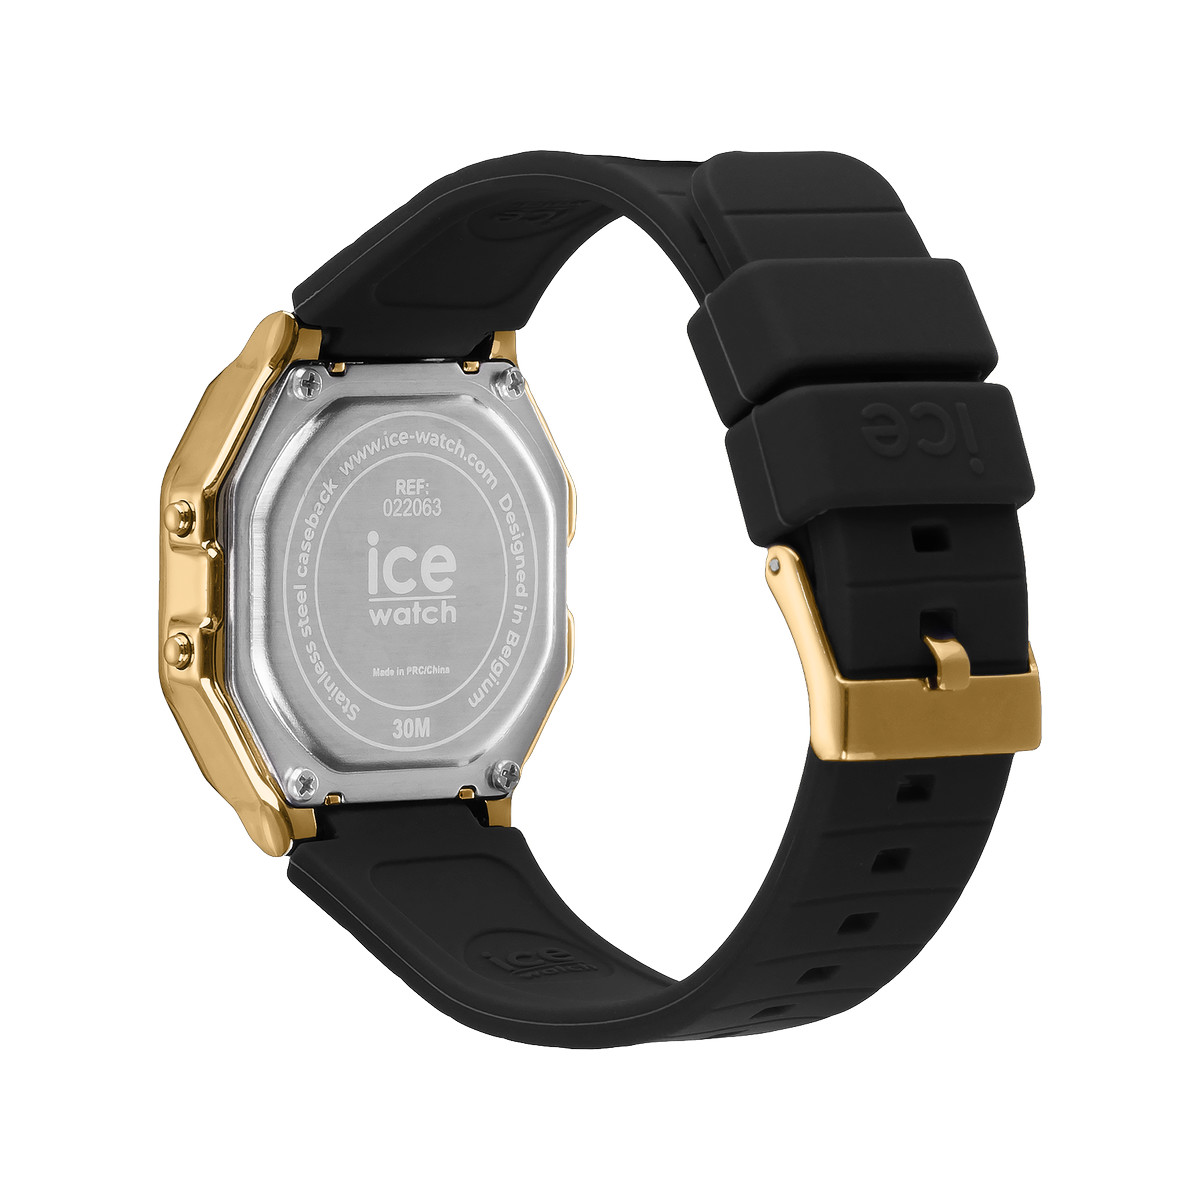 Montre ICE WATCH ice digit retro femme bracelet silicone noir - vue 3